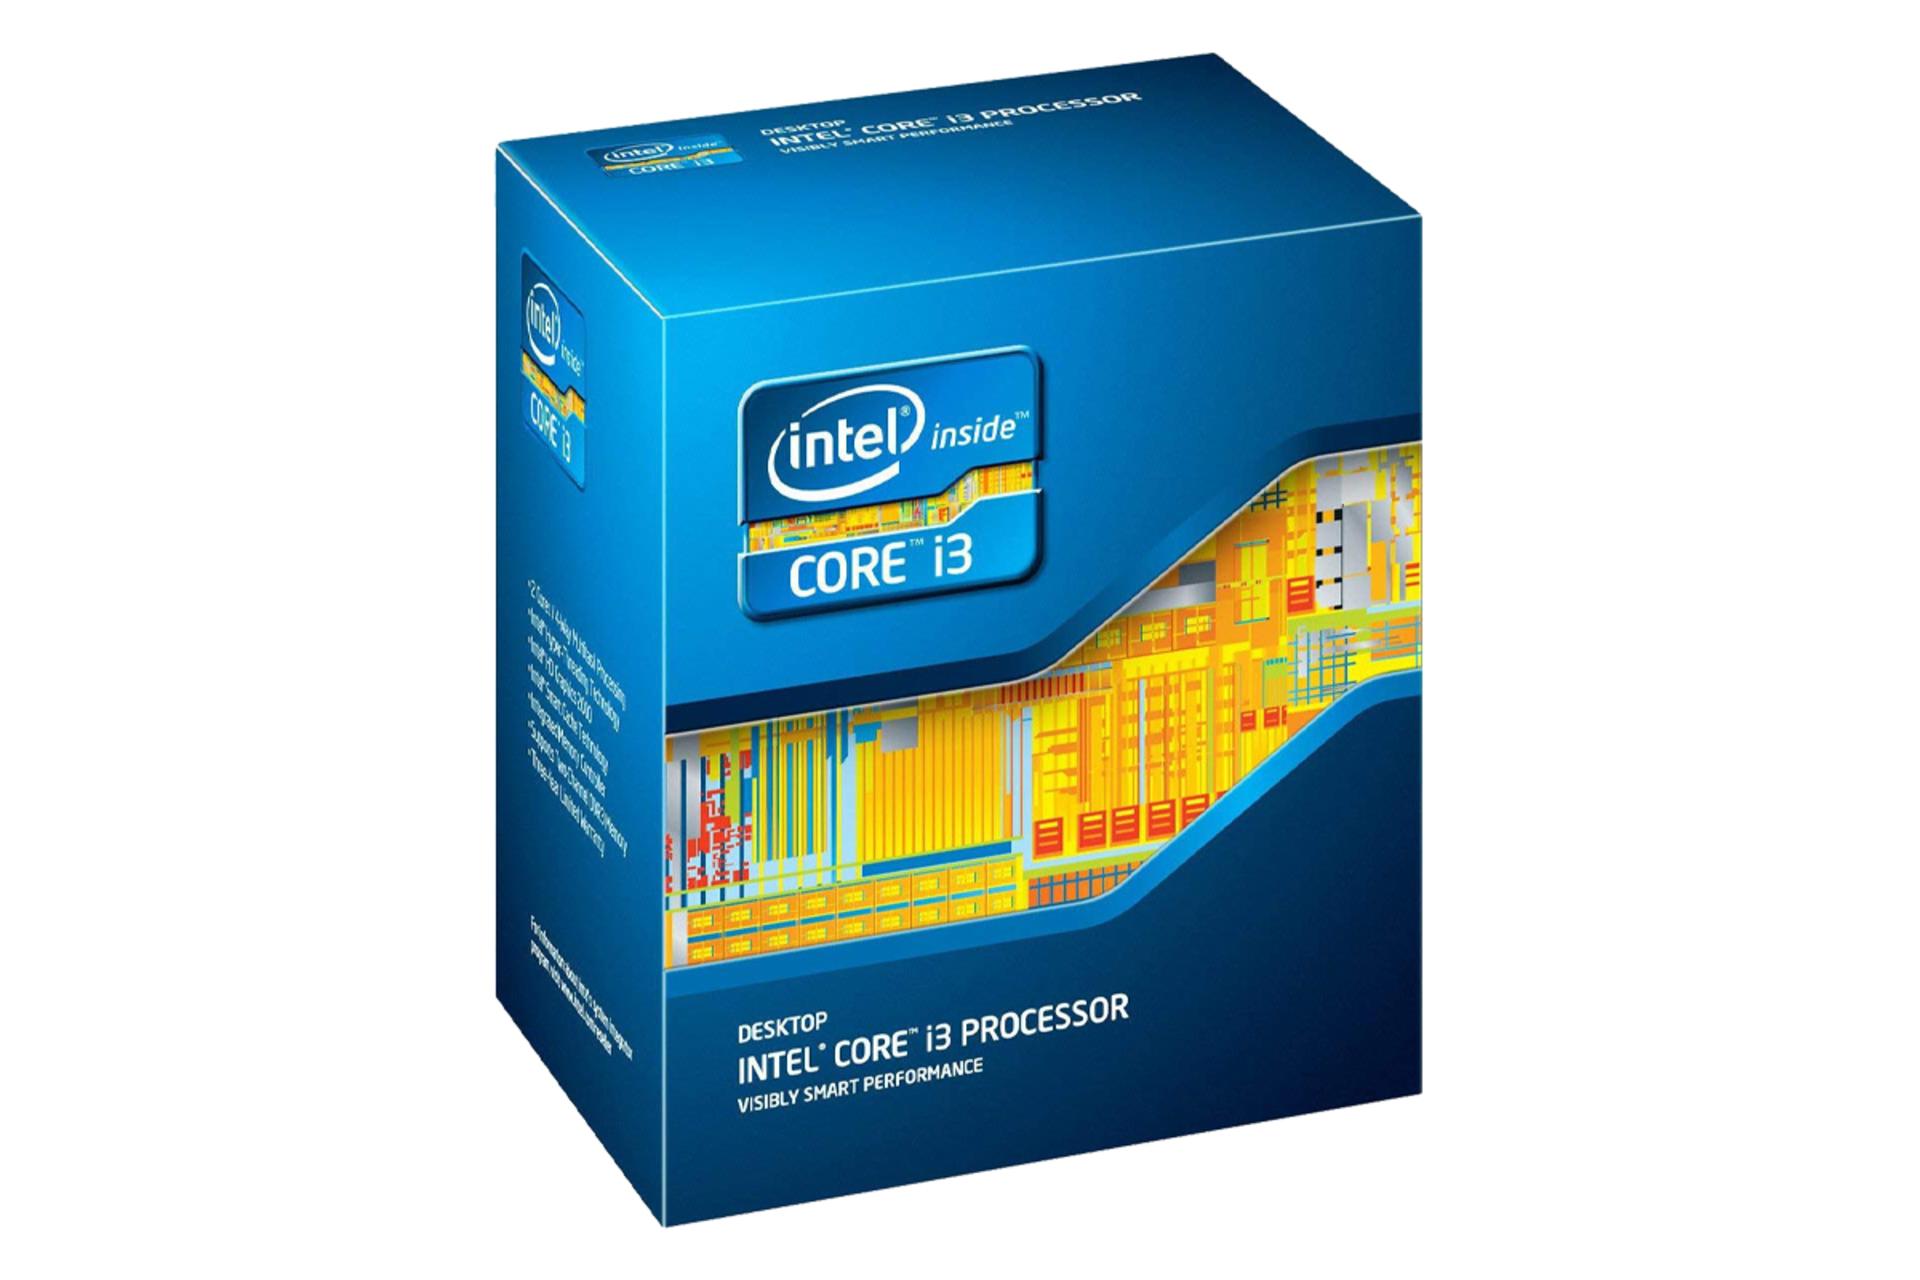  اینتل Core i3-2120 / Intel Core i3-2120